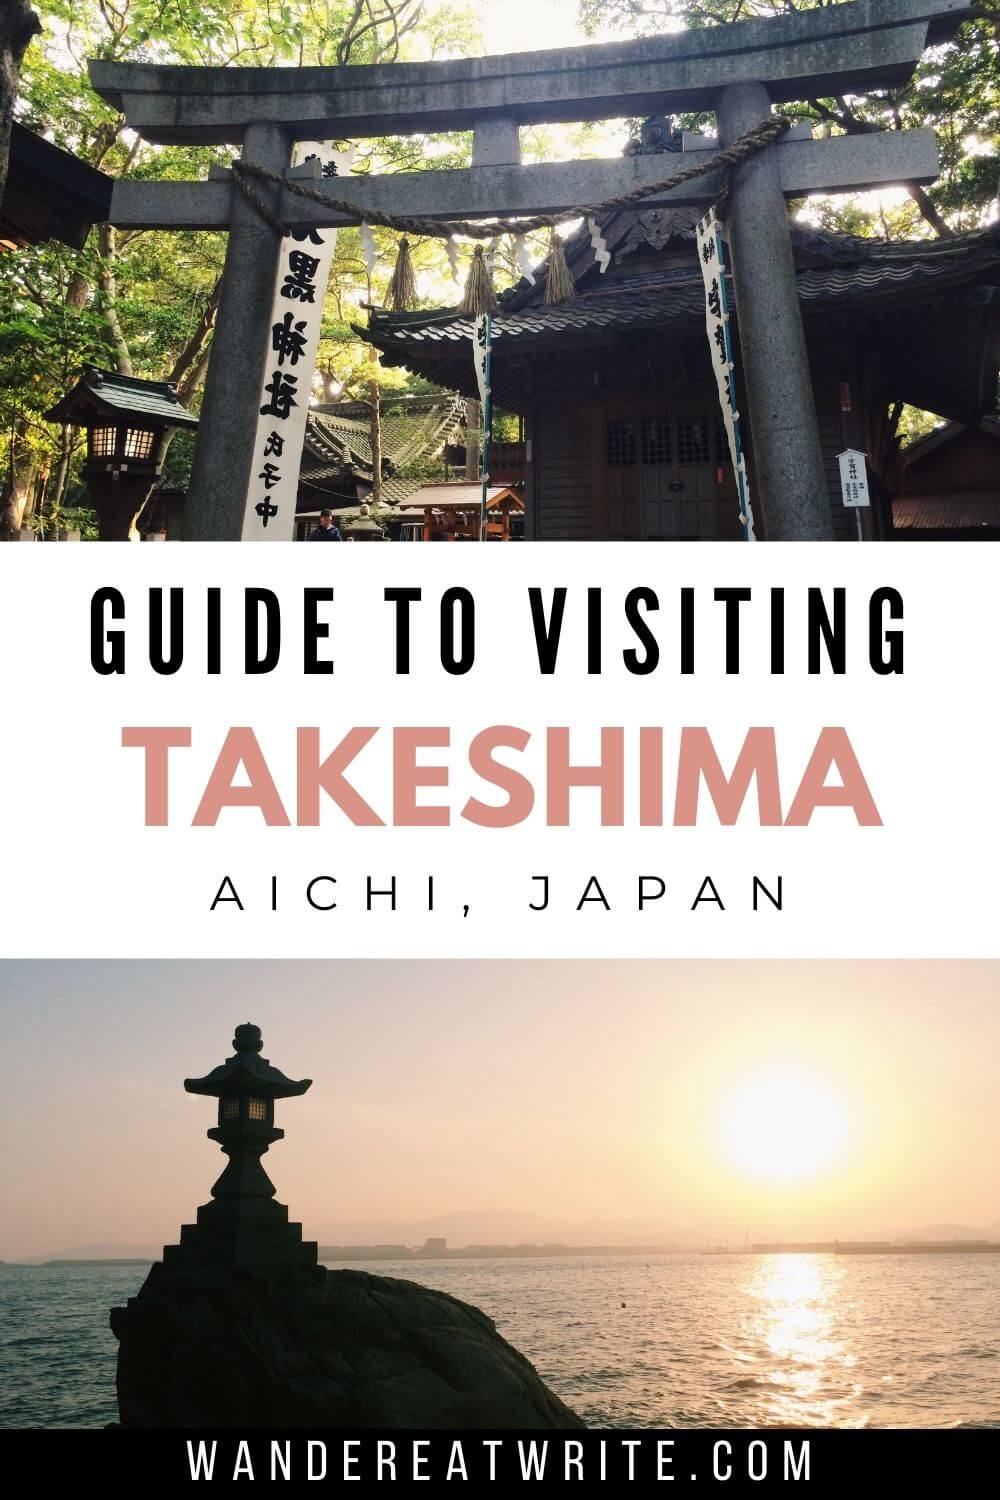 Guide to visiting Takeshima, Aichi, Japan